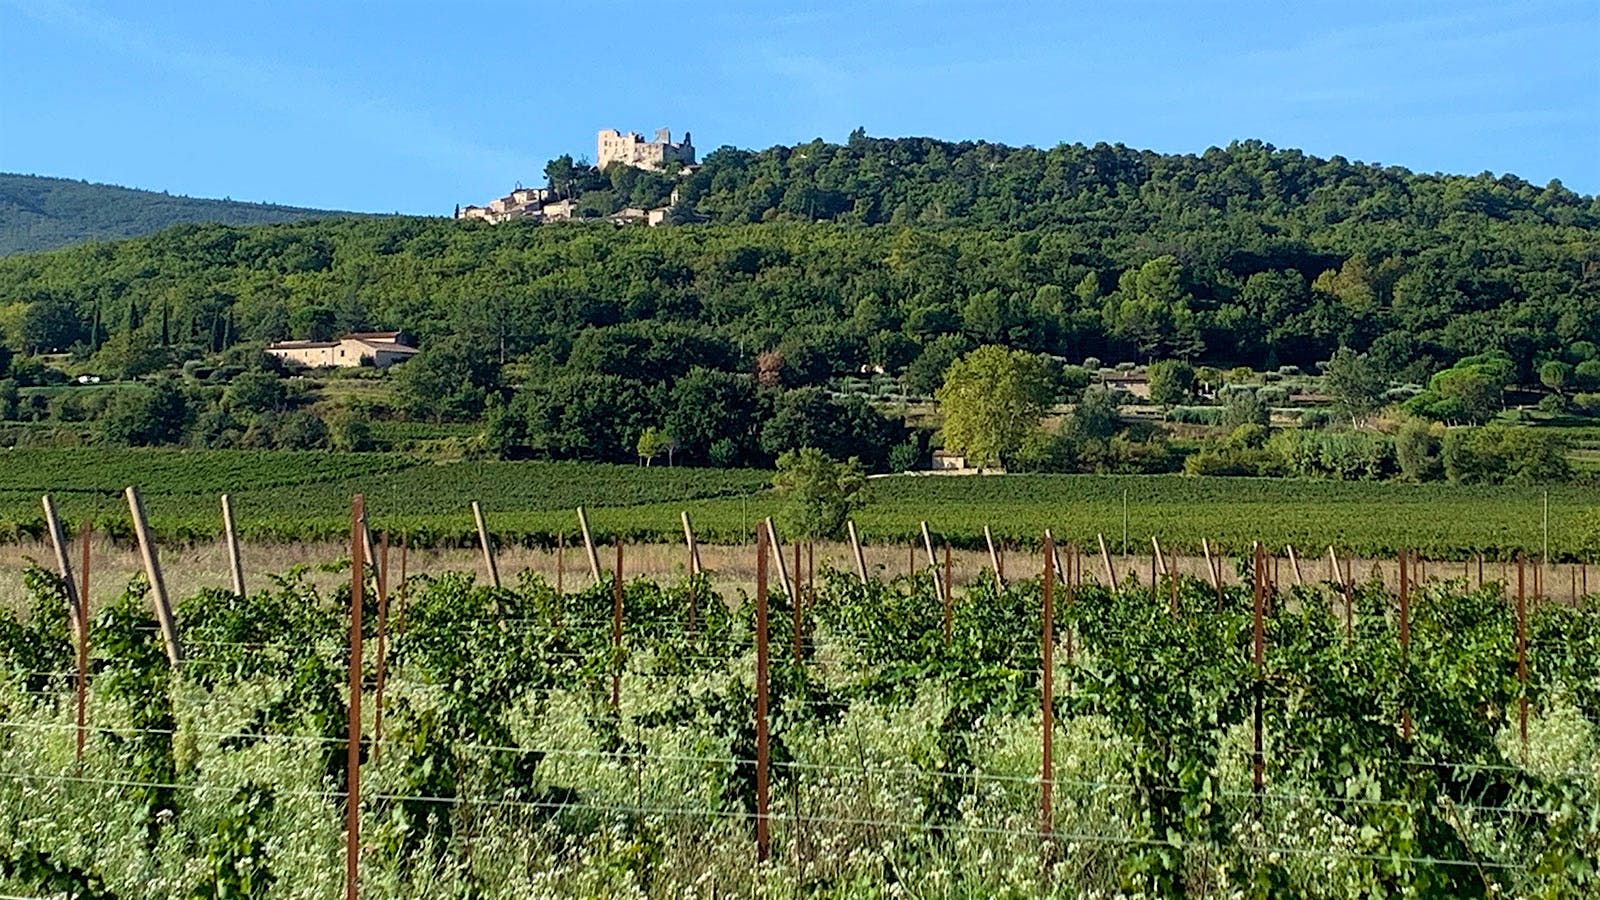 The vineyards of Les Quelles de La Coste sits on the valley floor below the village of Lacoste and its castle ruins.